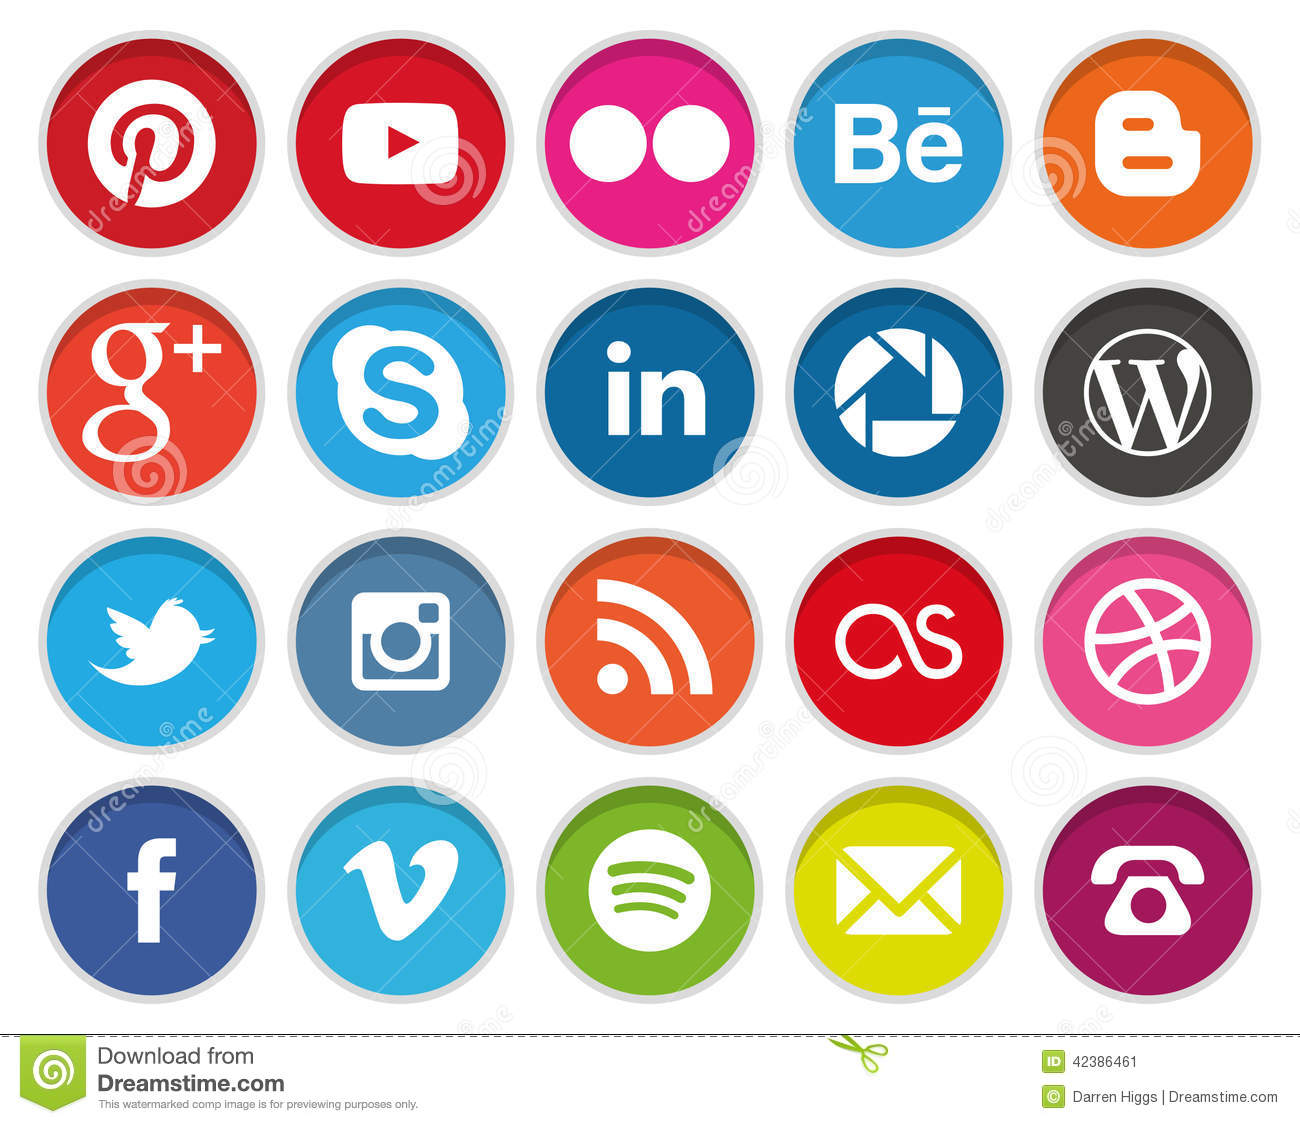 Print Social Media Icons